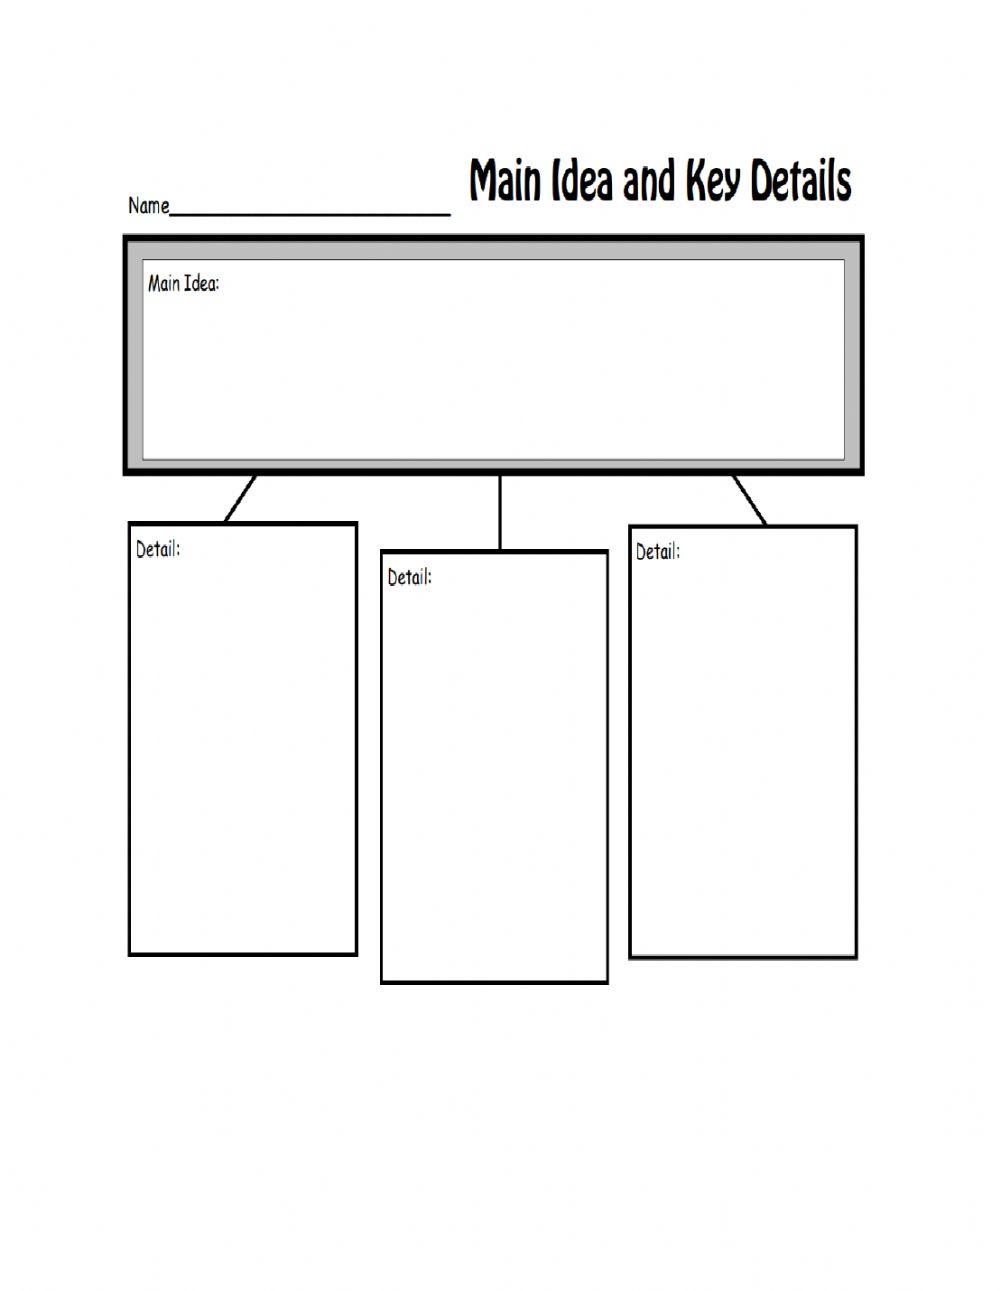 Main Idea and Key Details Graphic Organizer